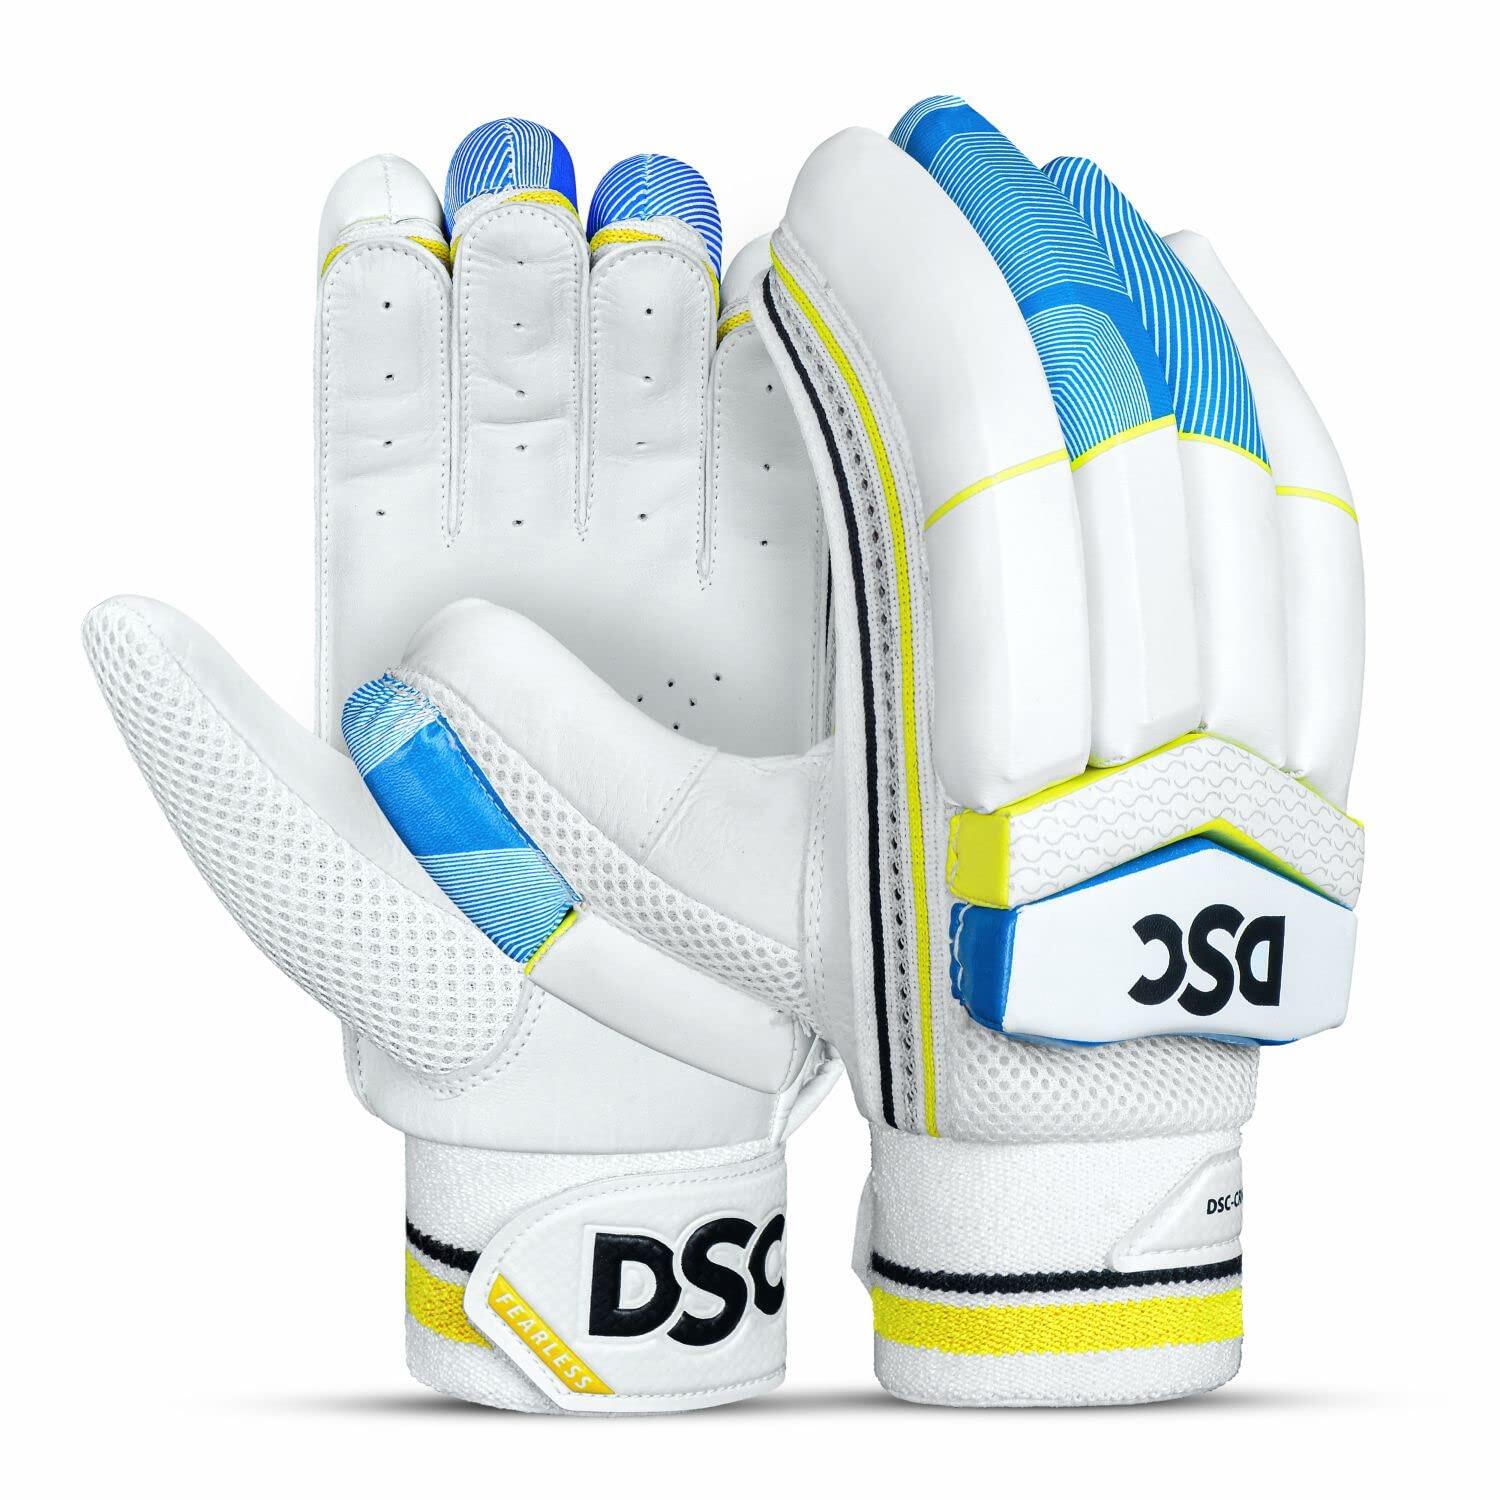 DSC DSC Condor Motion Leather Cricket Batting Gloves